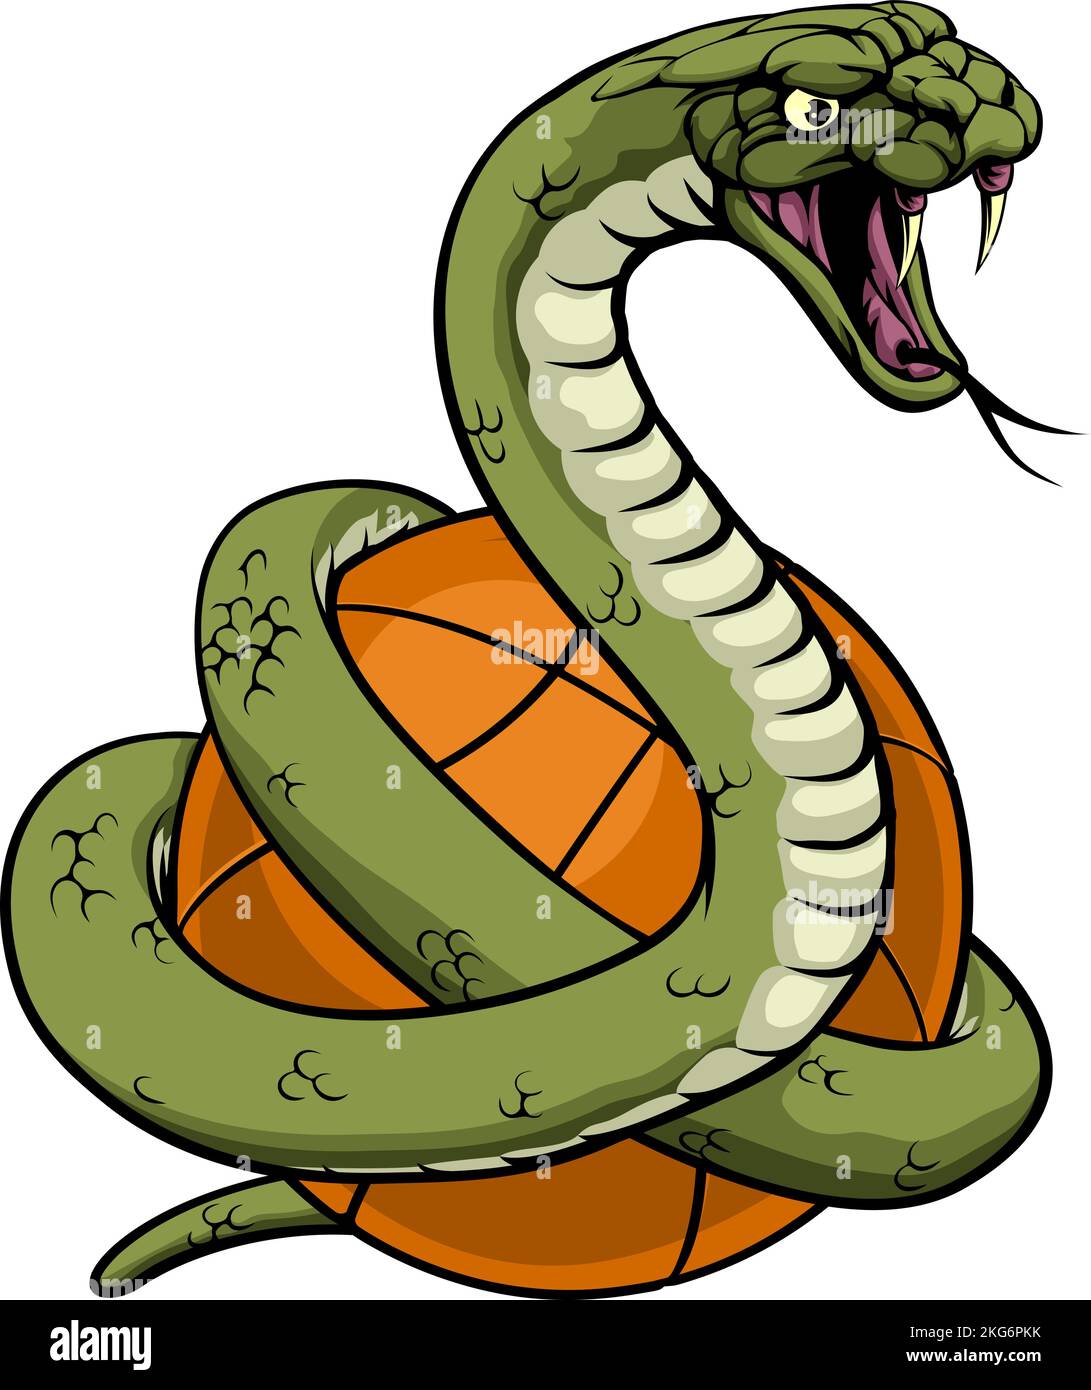 Snake Basketball Ball Animal Sports Team Mascot Illustrazione Vettoriale